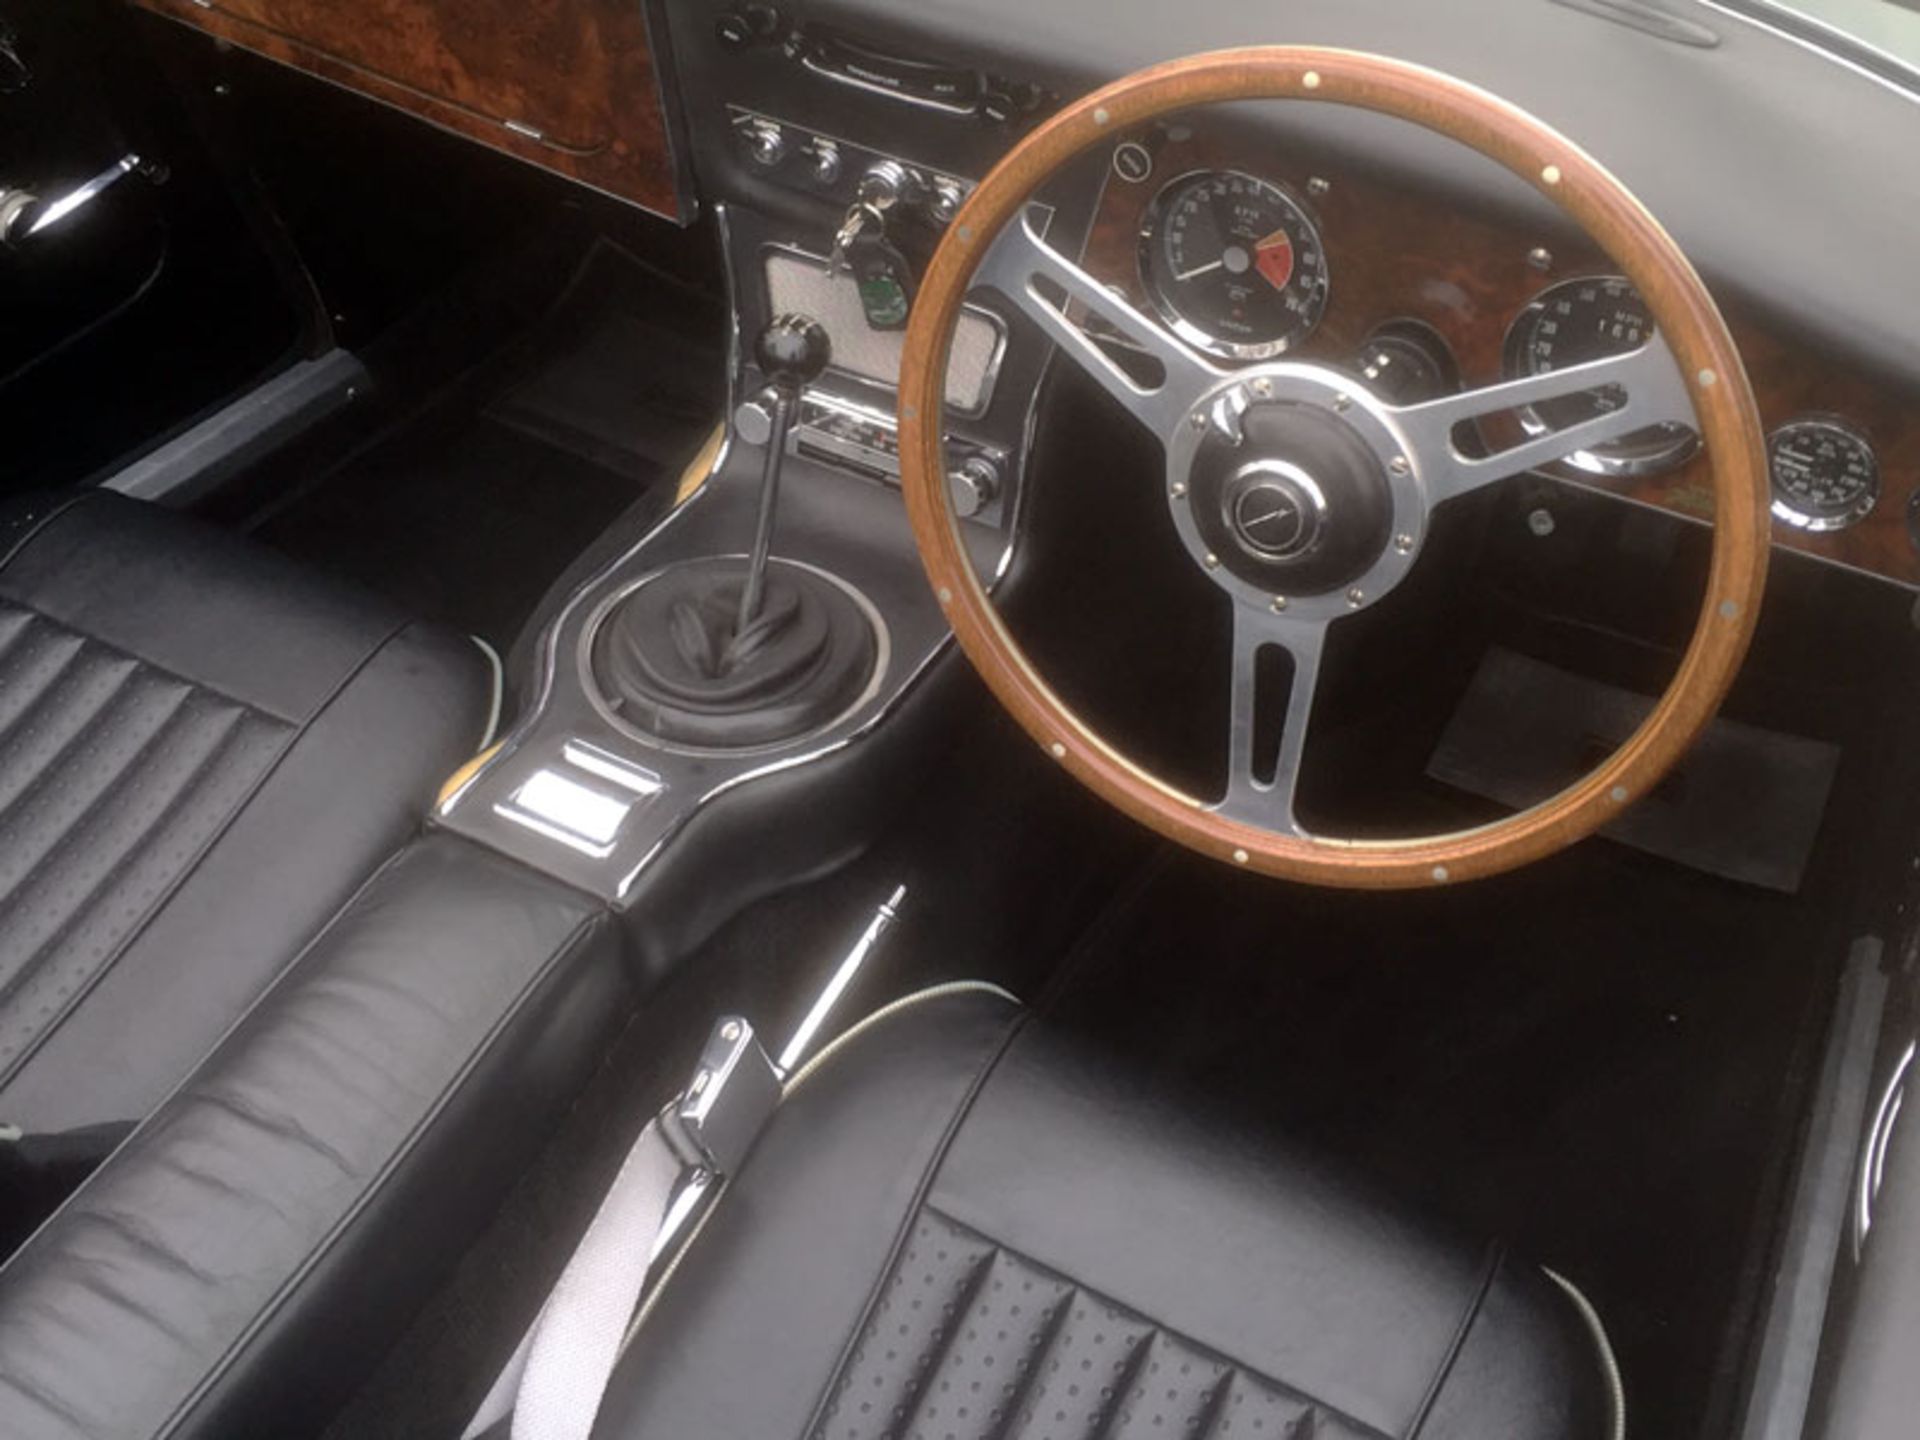 1966 Austin-Healey 3000 MKIII - Image 4 of 6